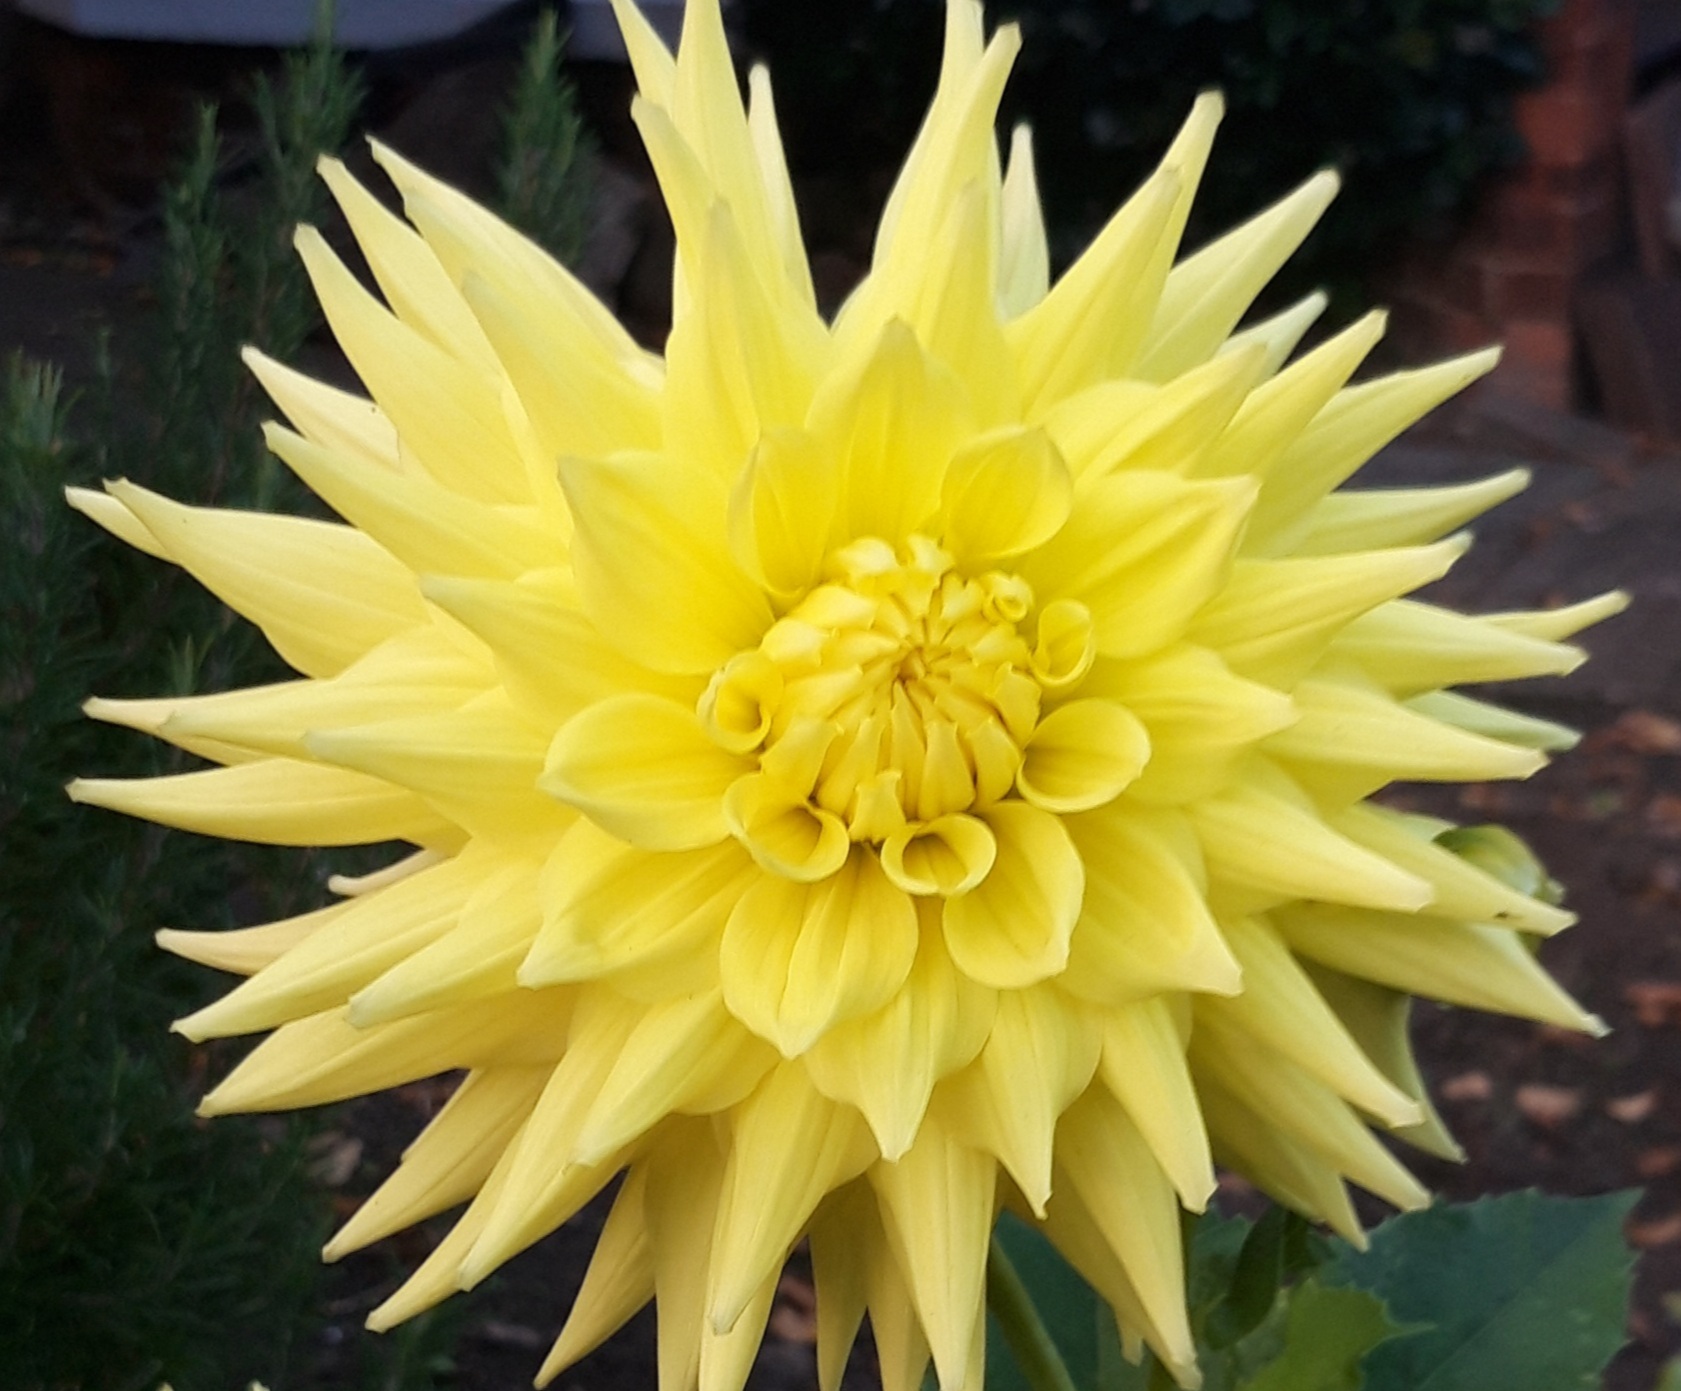 Yellow star flower